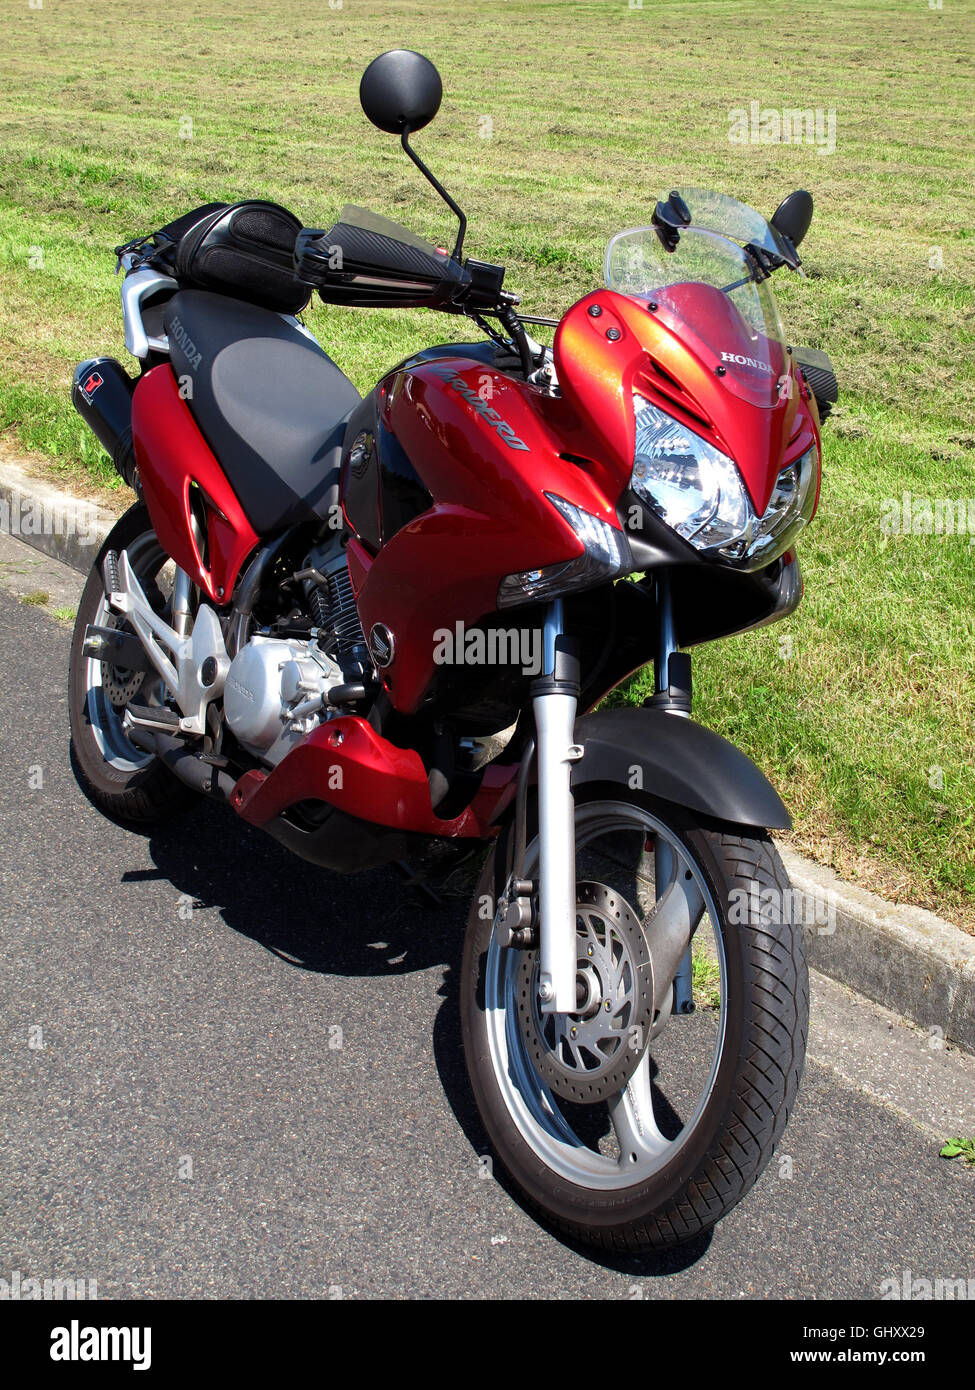 Honda Varadero 125 motorcycle in country, made in Japan Stock Photo - Alamy